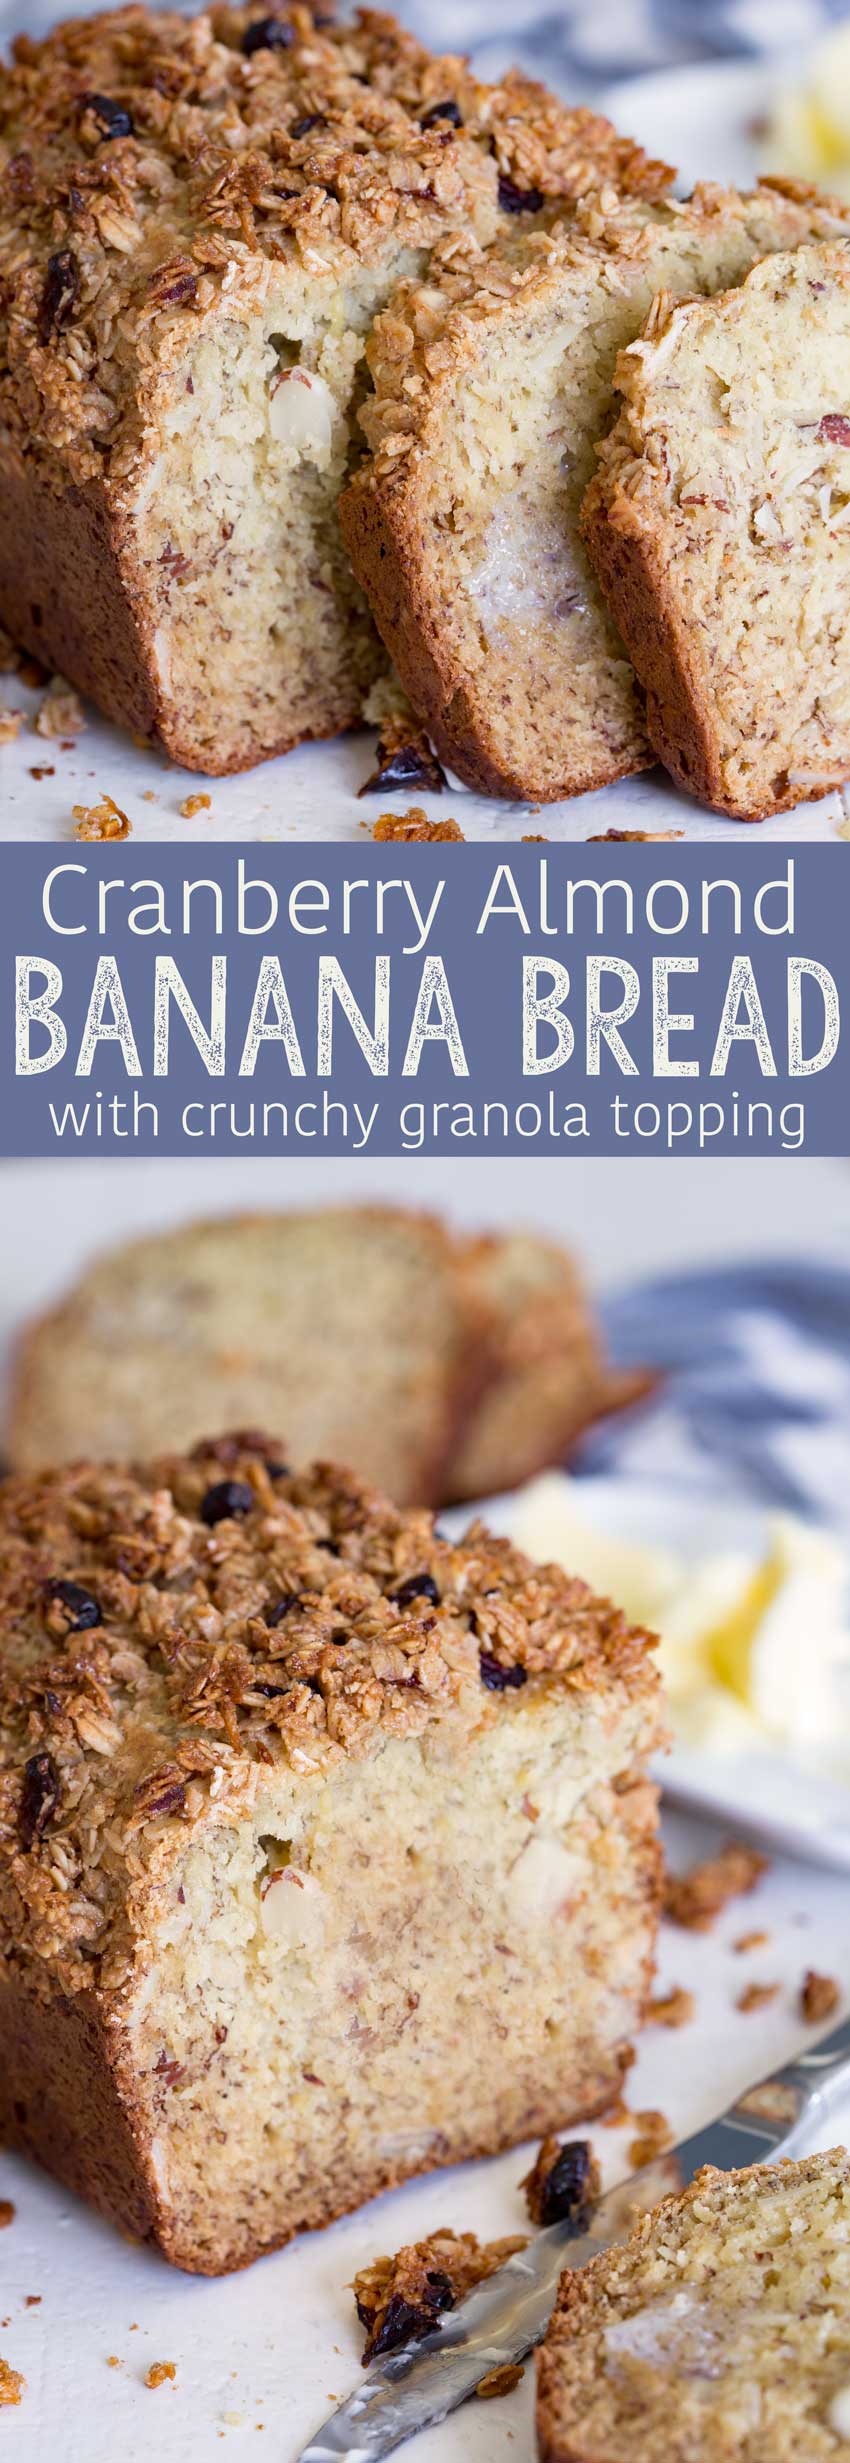 Cranberry almond granola topped banana bread